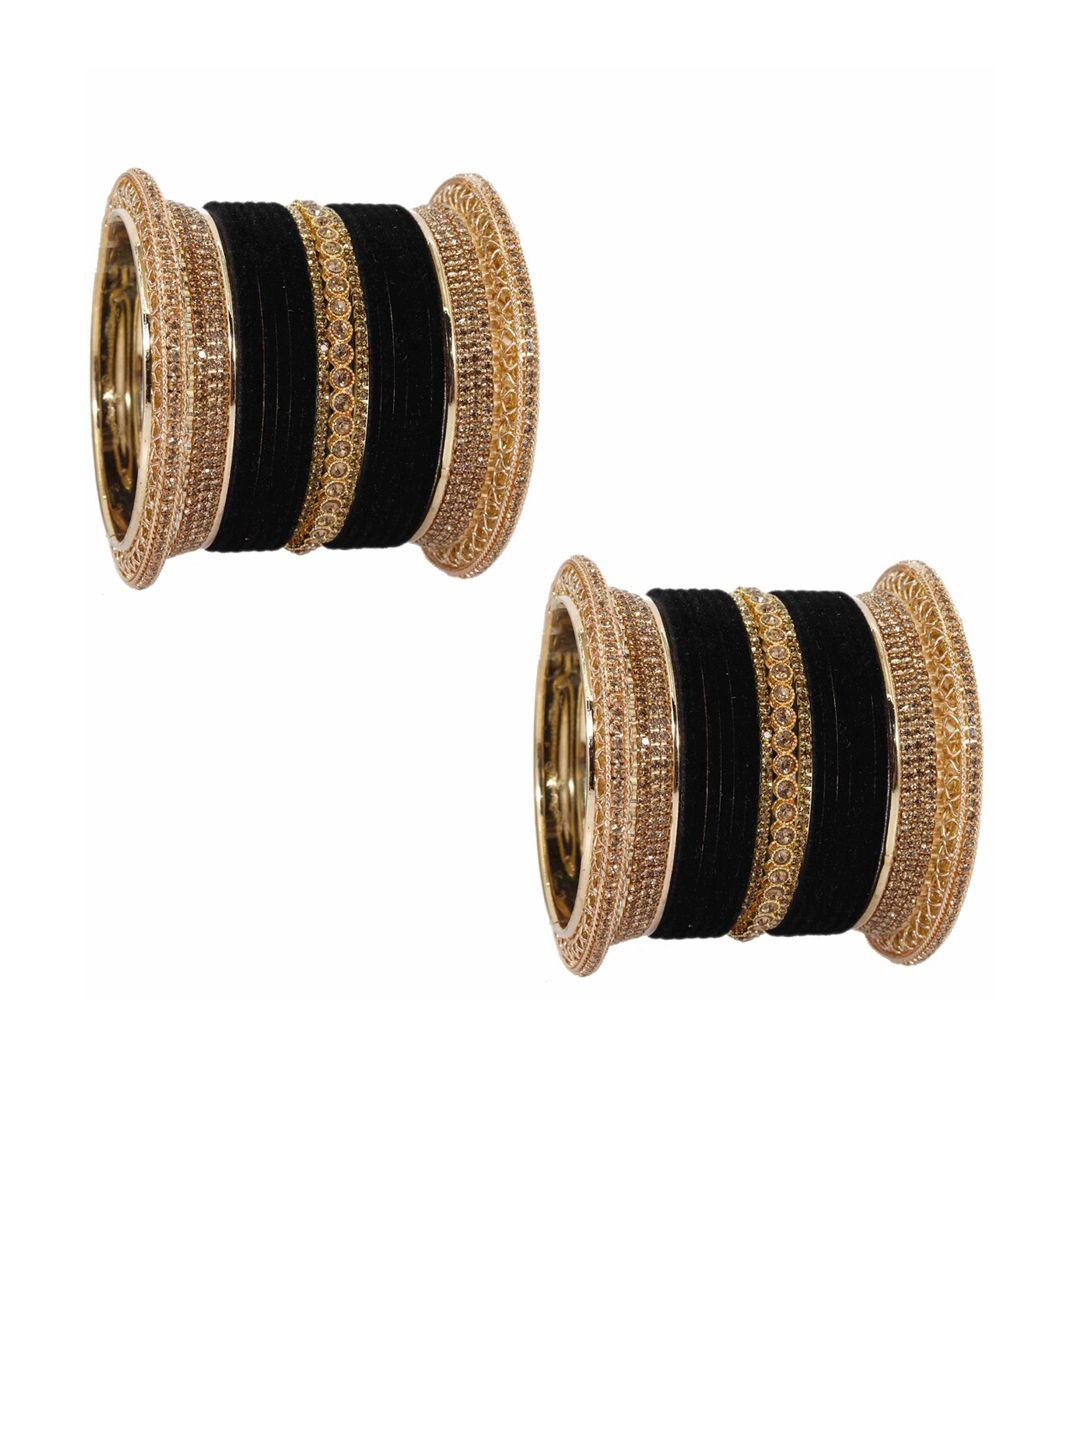 nmii set of 34 gold-plated zircon studded chuda bangles